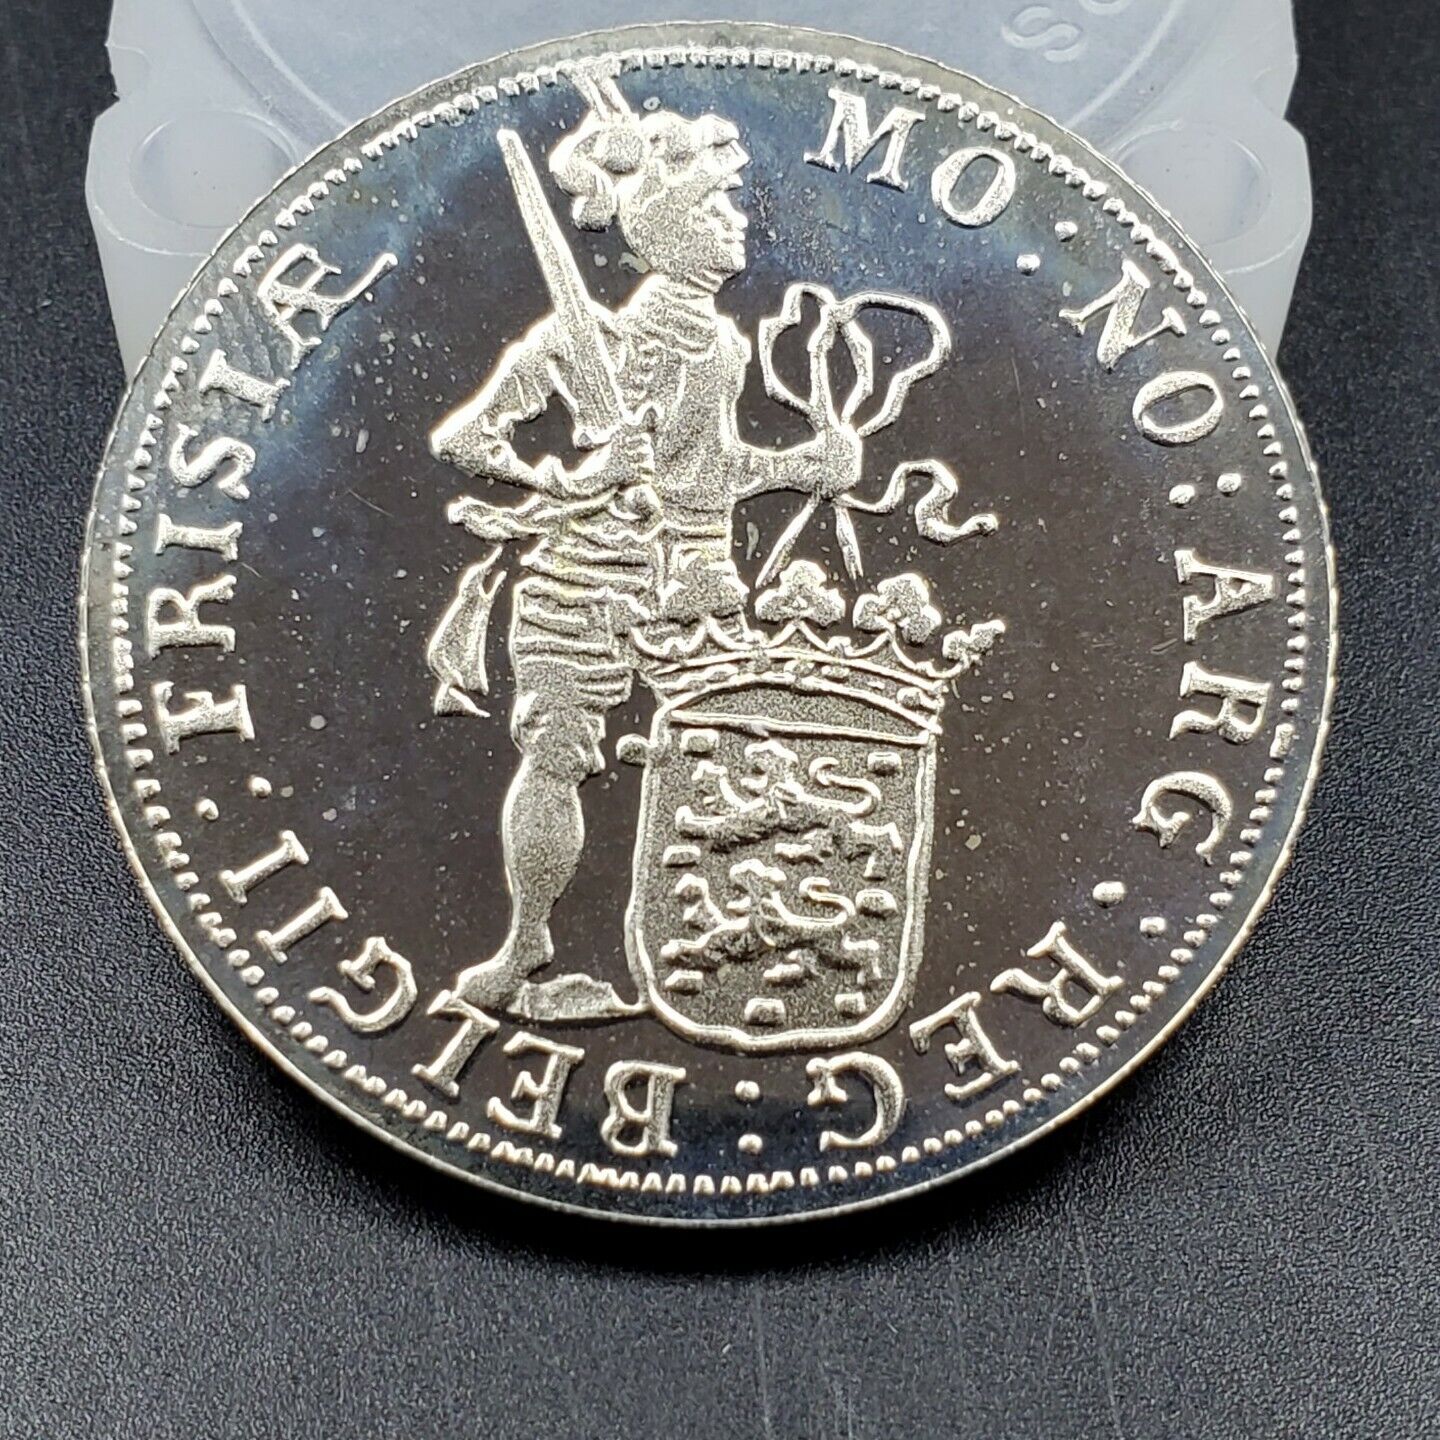 Netherlands 1998 Knight Ducat Silver Coin Coin Gem Proof Utrecht Mint Concordia